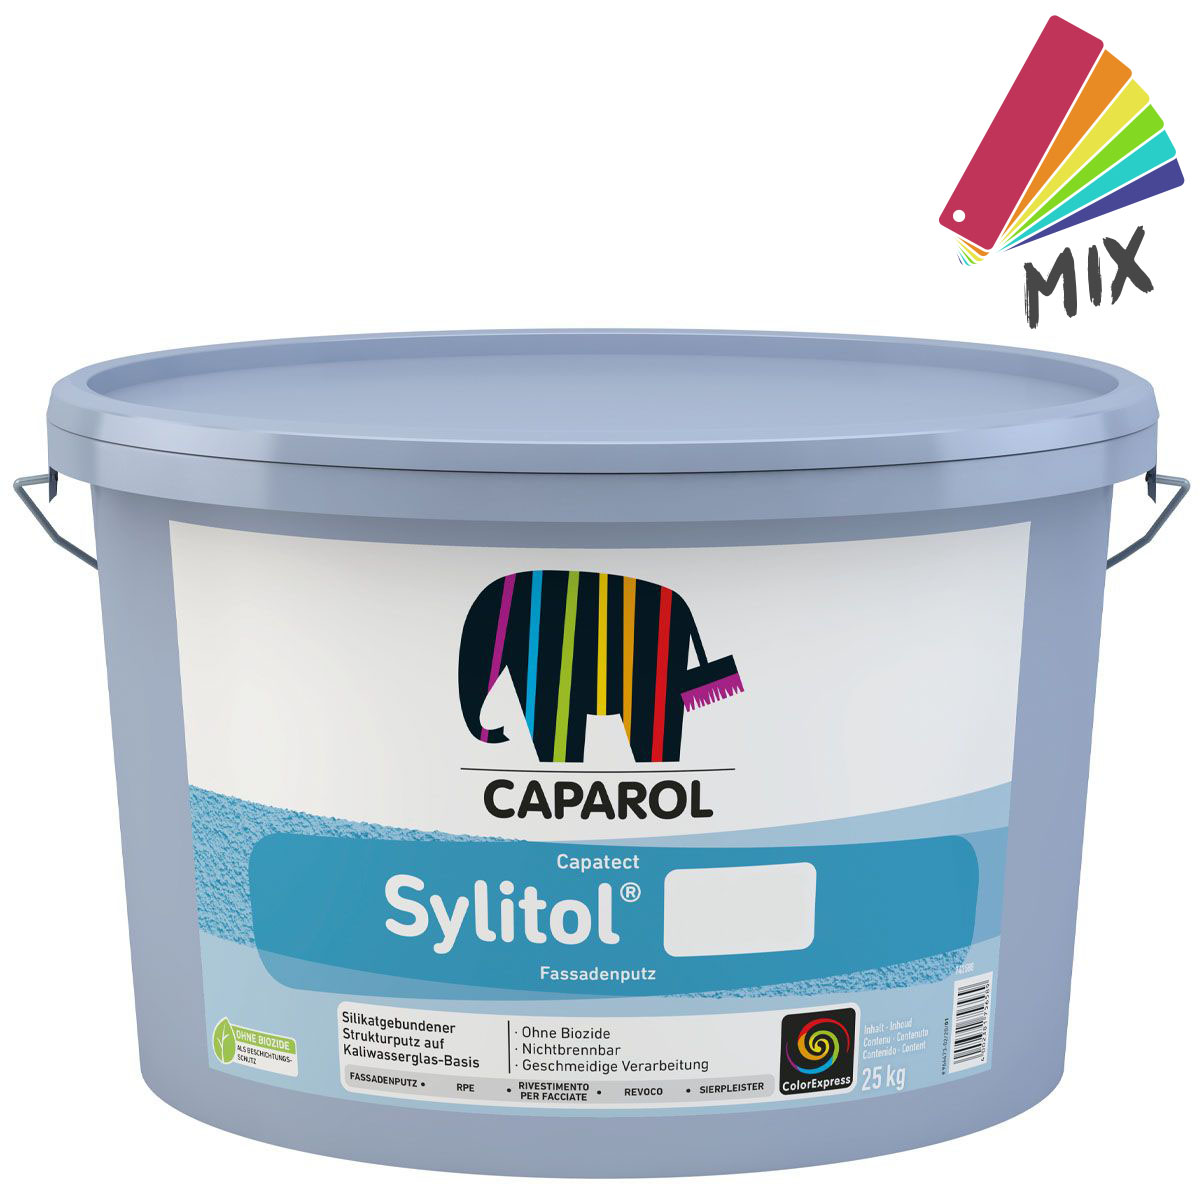 Caparol Capatect Sylitol Fassadenputz K20 (2mm) 25kg, MIX